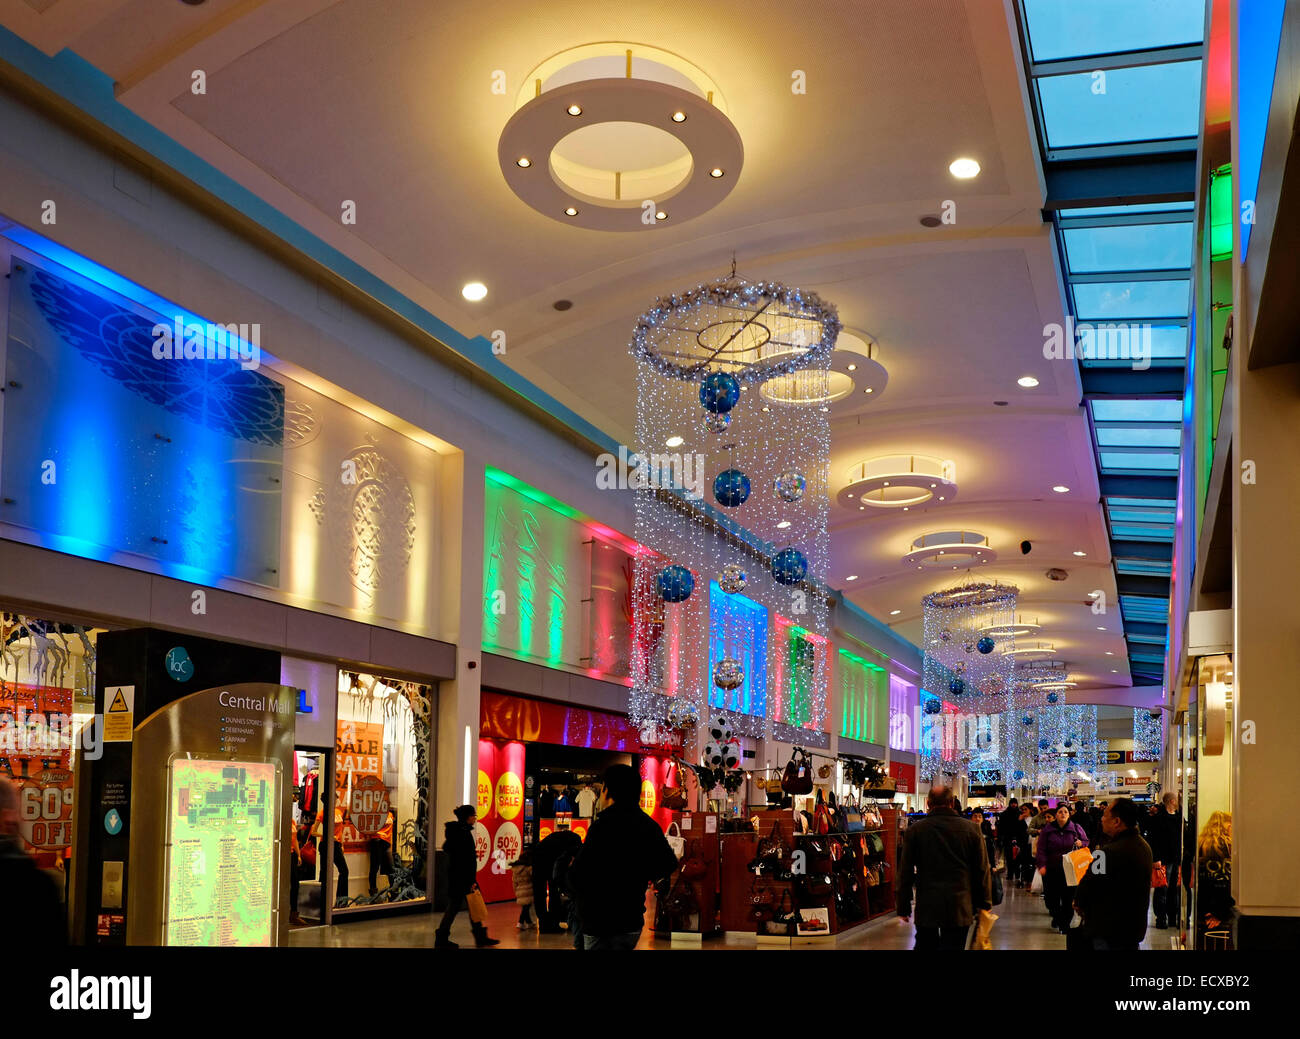 Interieur des Ilac Shopping Mall, Centre, Dublin Irland Stockfoto